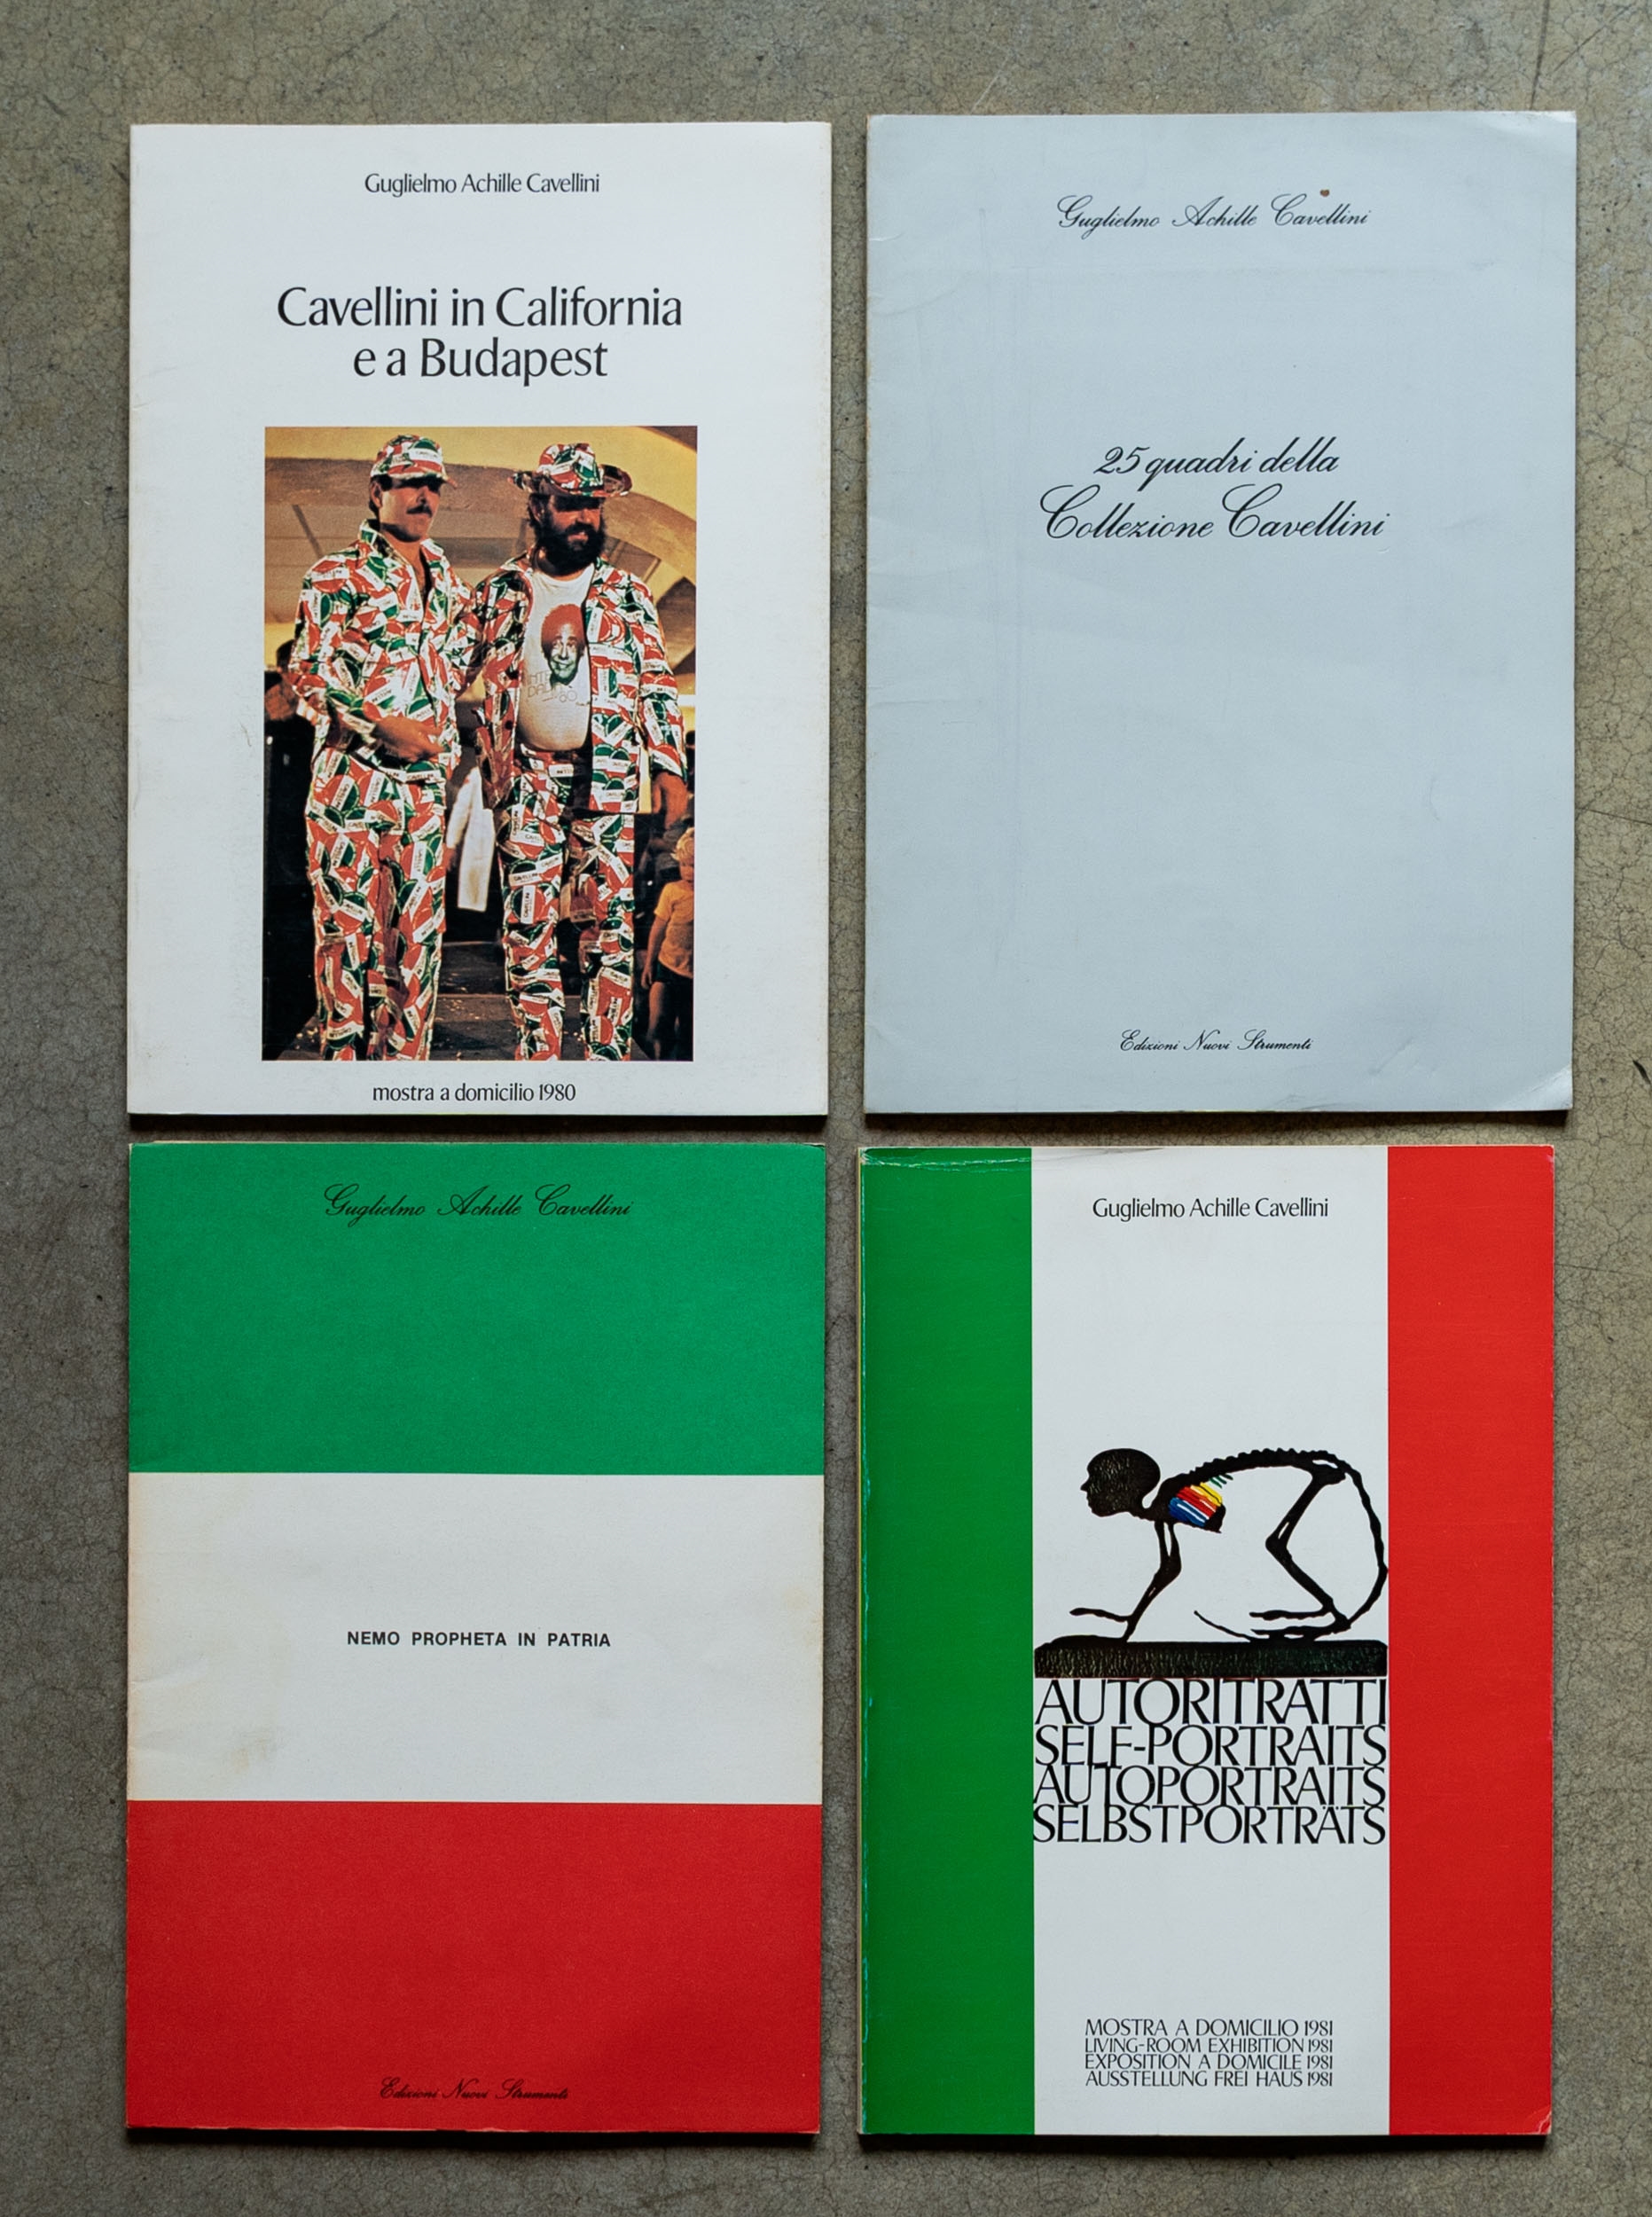 Lot of four catalogues - Gugliemo Achille Cavellini